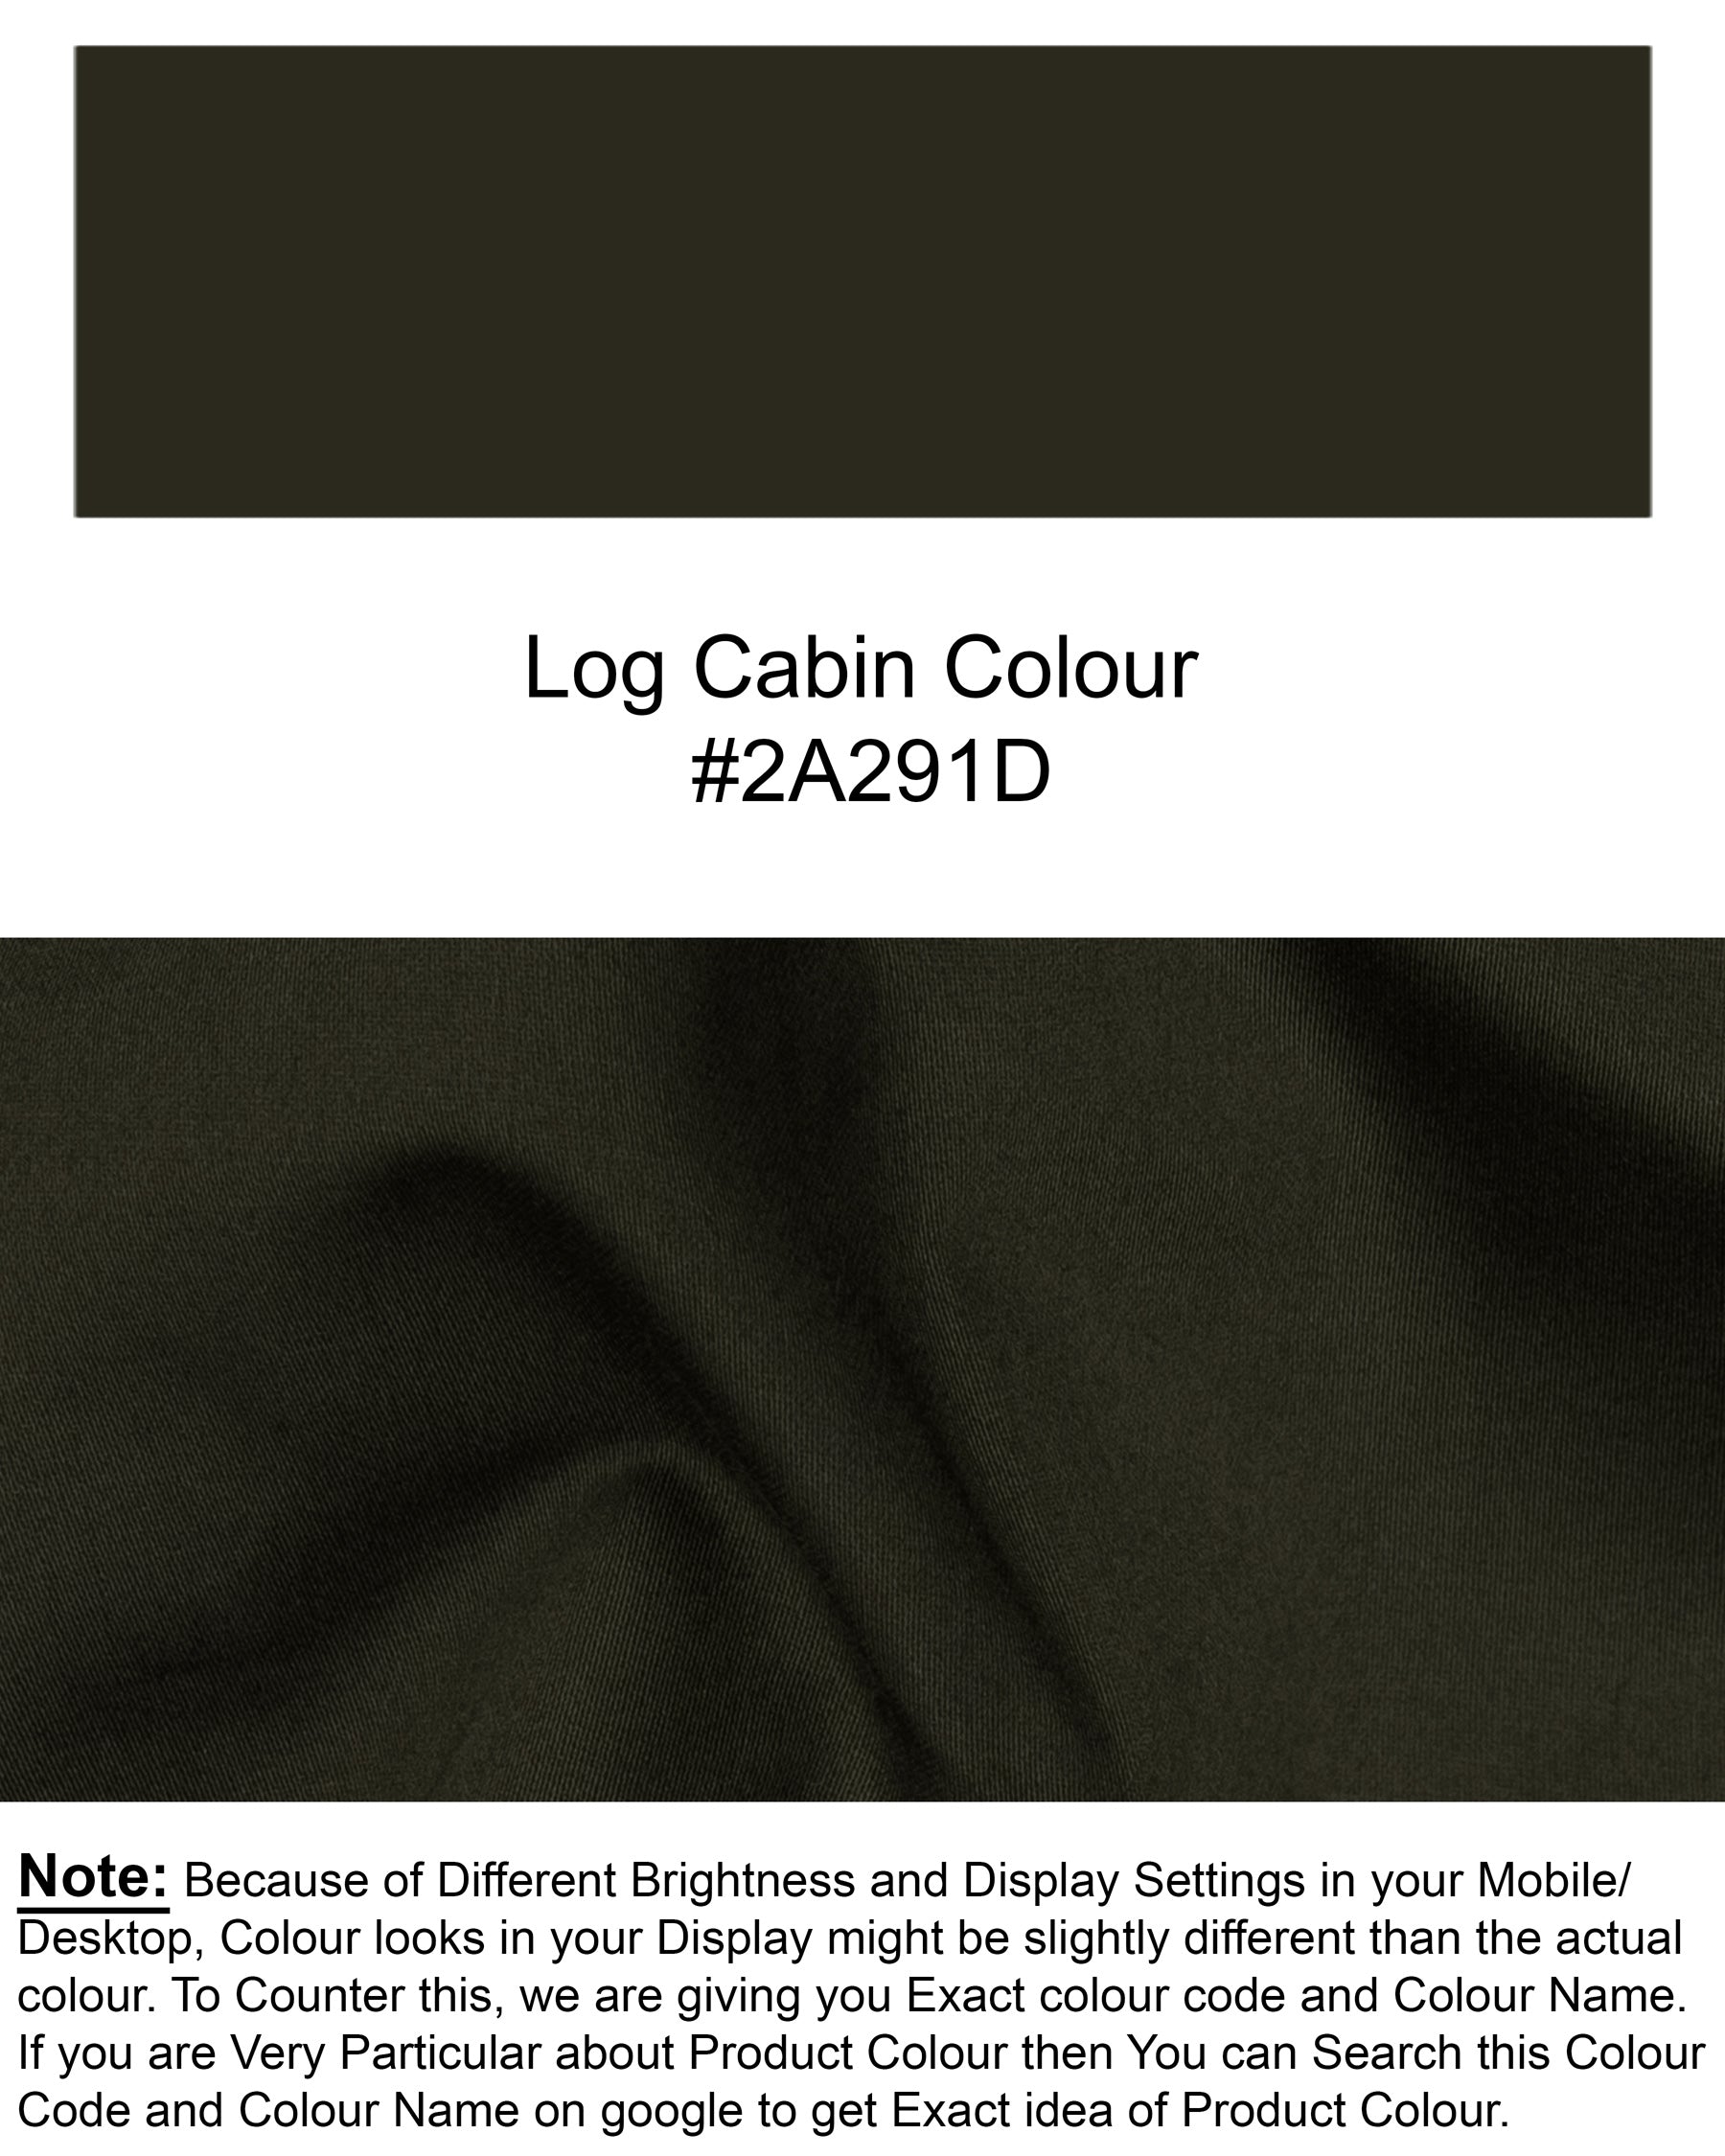 Log Cabin Green DouSTe Breasted Premium Cotton Suit ST1323-DB-36, ST1323-DB-38, ST1323-DB-40, ST1323-DB-42, ST1323-DB-44, ST1323-DB-46, ST1323-DB-48, ST1323-DB-50, ST1323-DB-52, ST1323-DB-54, ST1323-DB-56, ST1323-DB-58, ST1323-DB-60